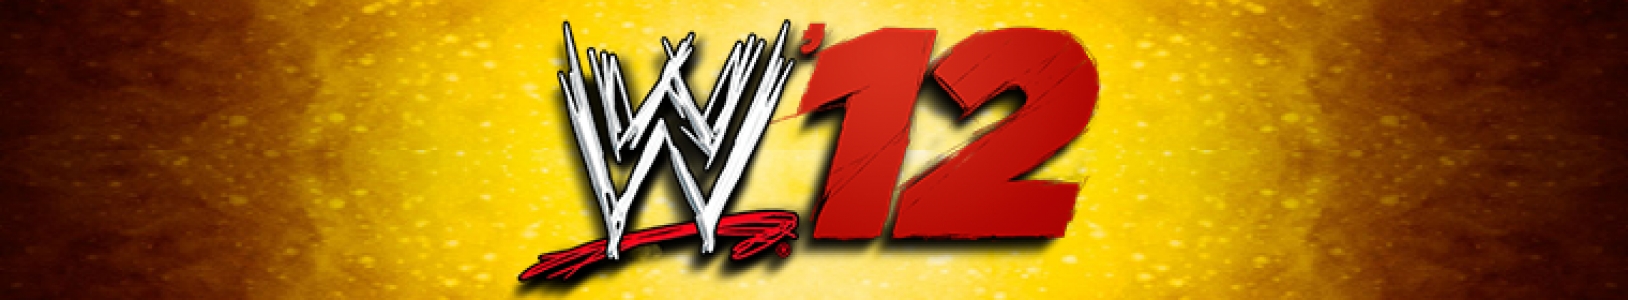 WWE '12 banner